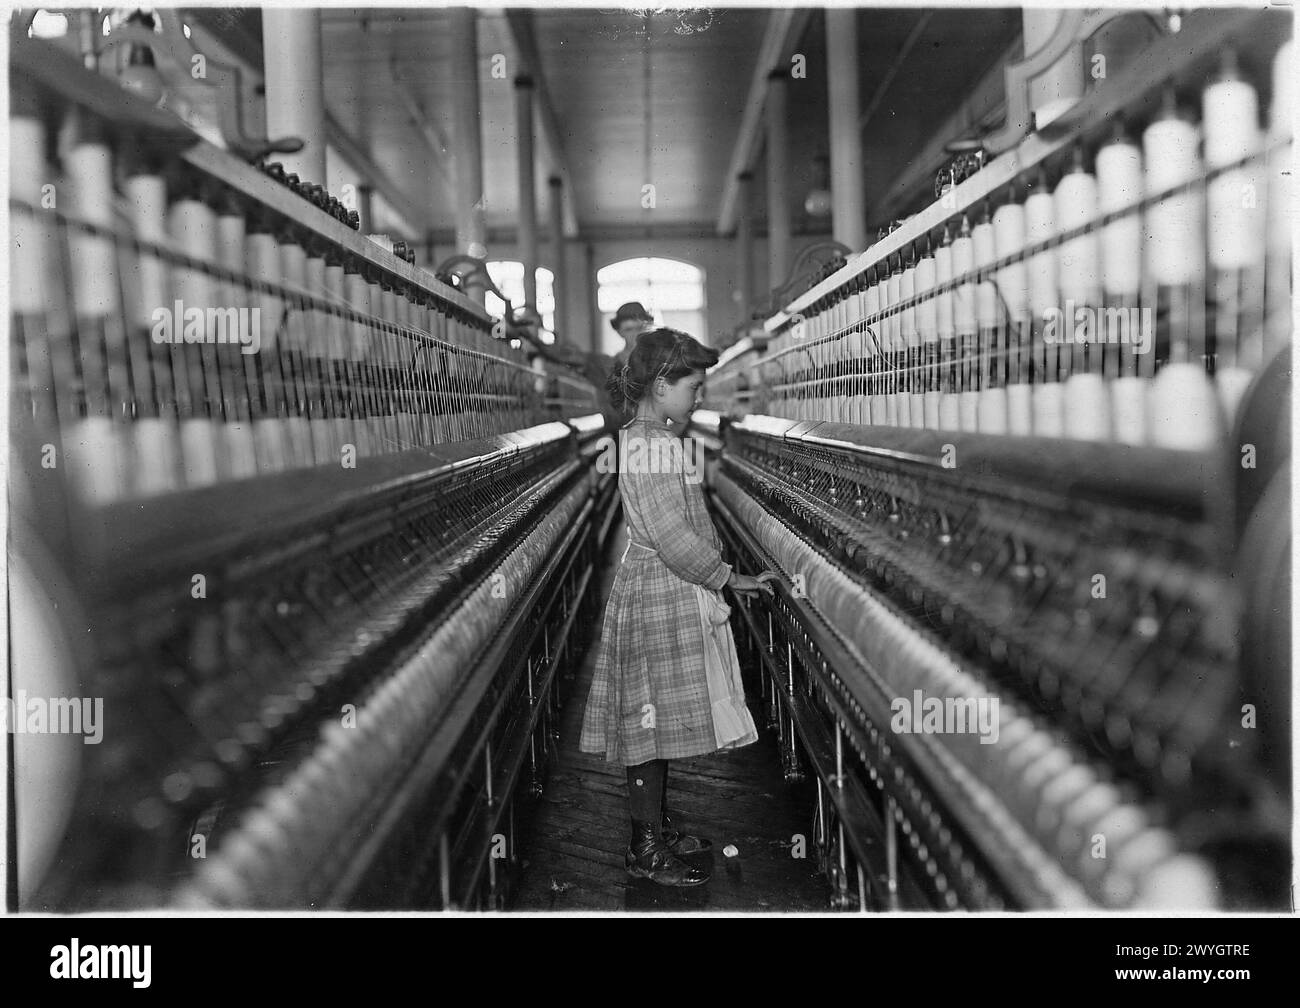 Junge Mädchen Spinner in Lancaster Cotton Mills. Lancaster, S.C., Dezember 1908. Vintage American Photography 1910s Untergeordnetes Arbeitsprojekt. Quelle: Lewis Hines Stockfoto